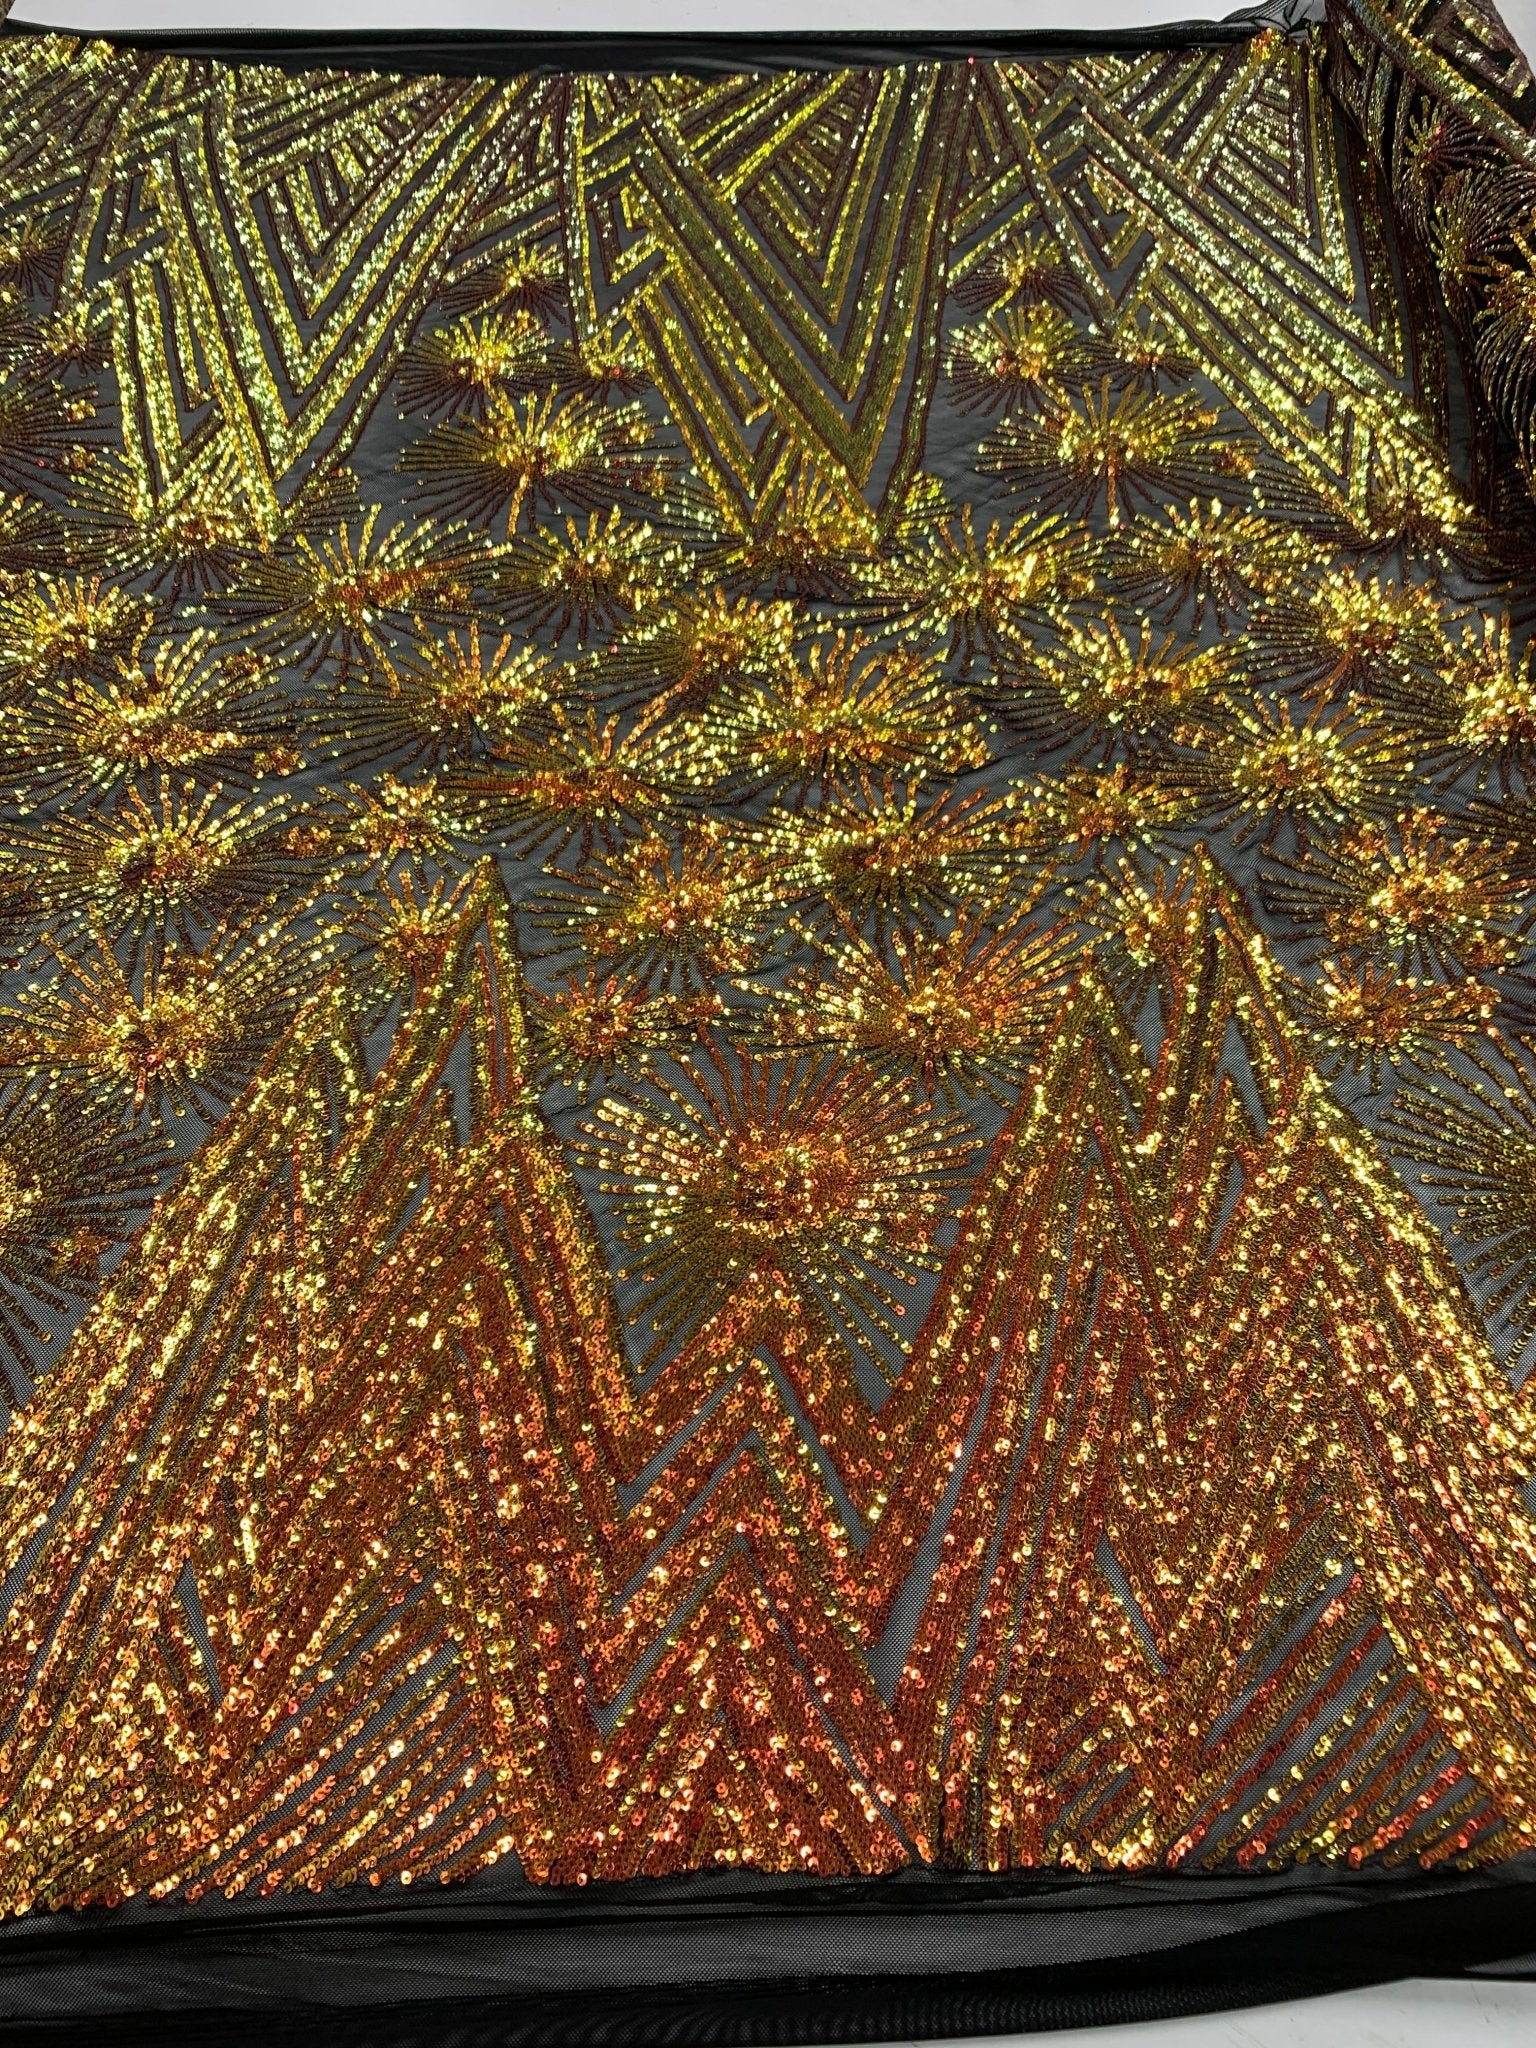 4 Way Stretch Iridescent Geometric Sequin Embroidered Mesh Lace FabricICEFABRICICE FABRICSOrange IridescentBy The Yard (58" Wide)4 Way Stretch Iridescent Geometric Sequin Embroidered Mesh Lace Fabric ICEFABRIC |Orange Iridescent